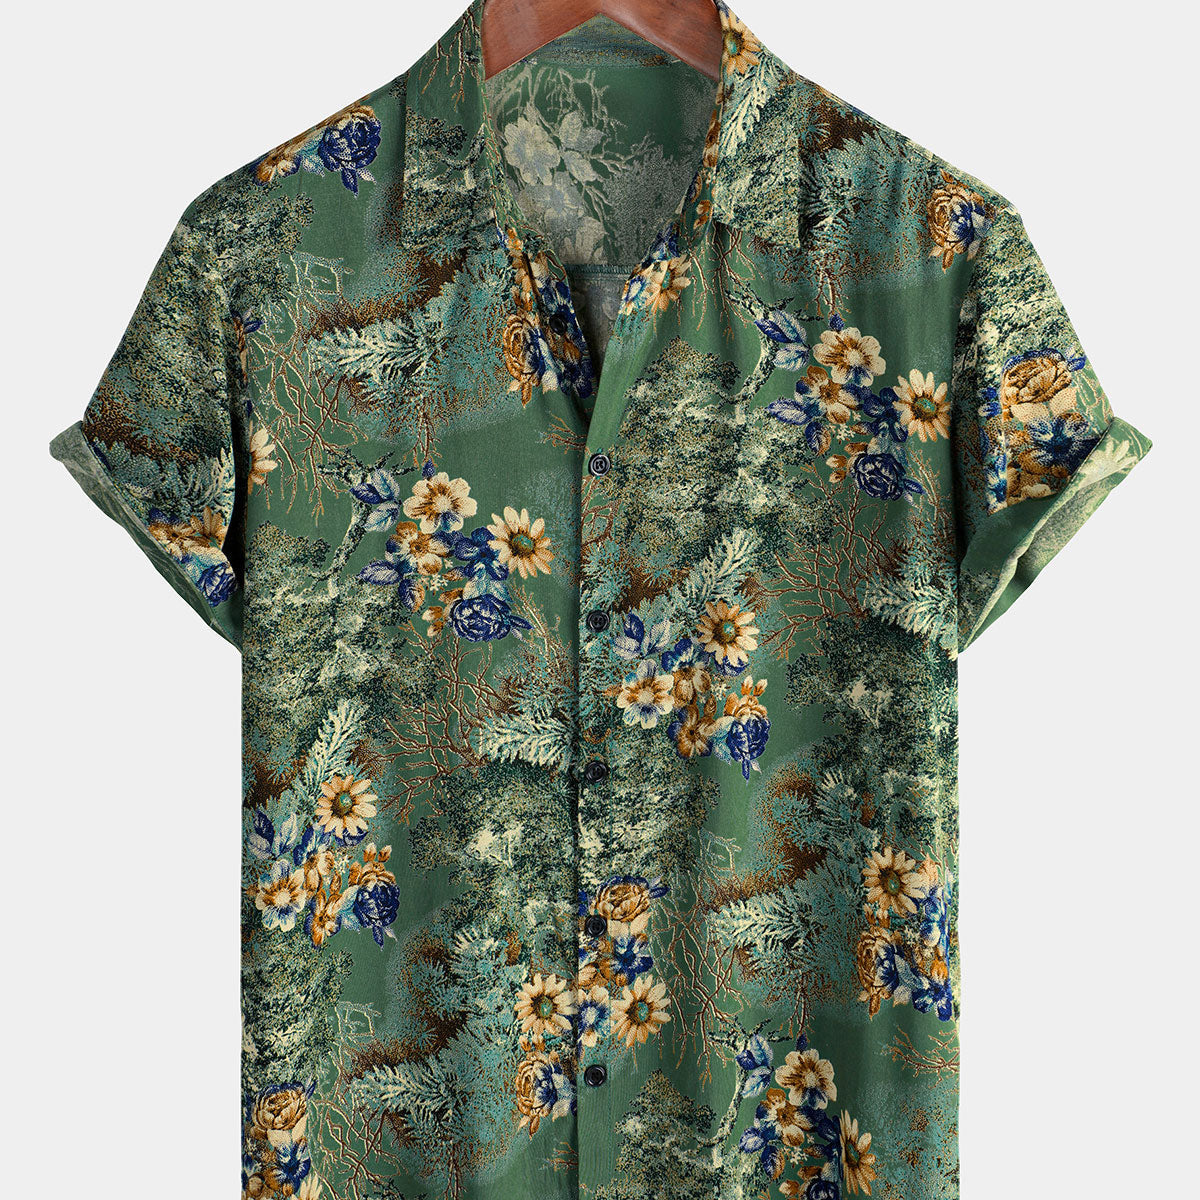 Men's Retro Floral Green Summer Holiday Short Sleeve Shirt